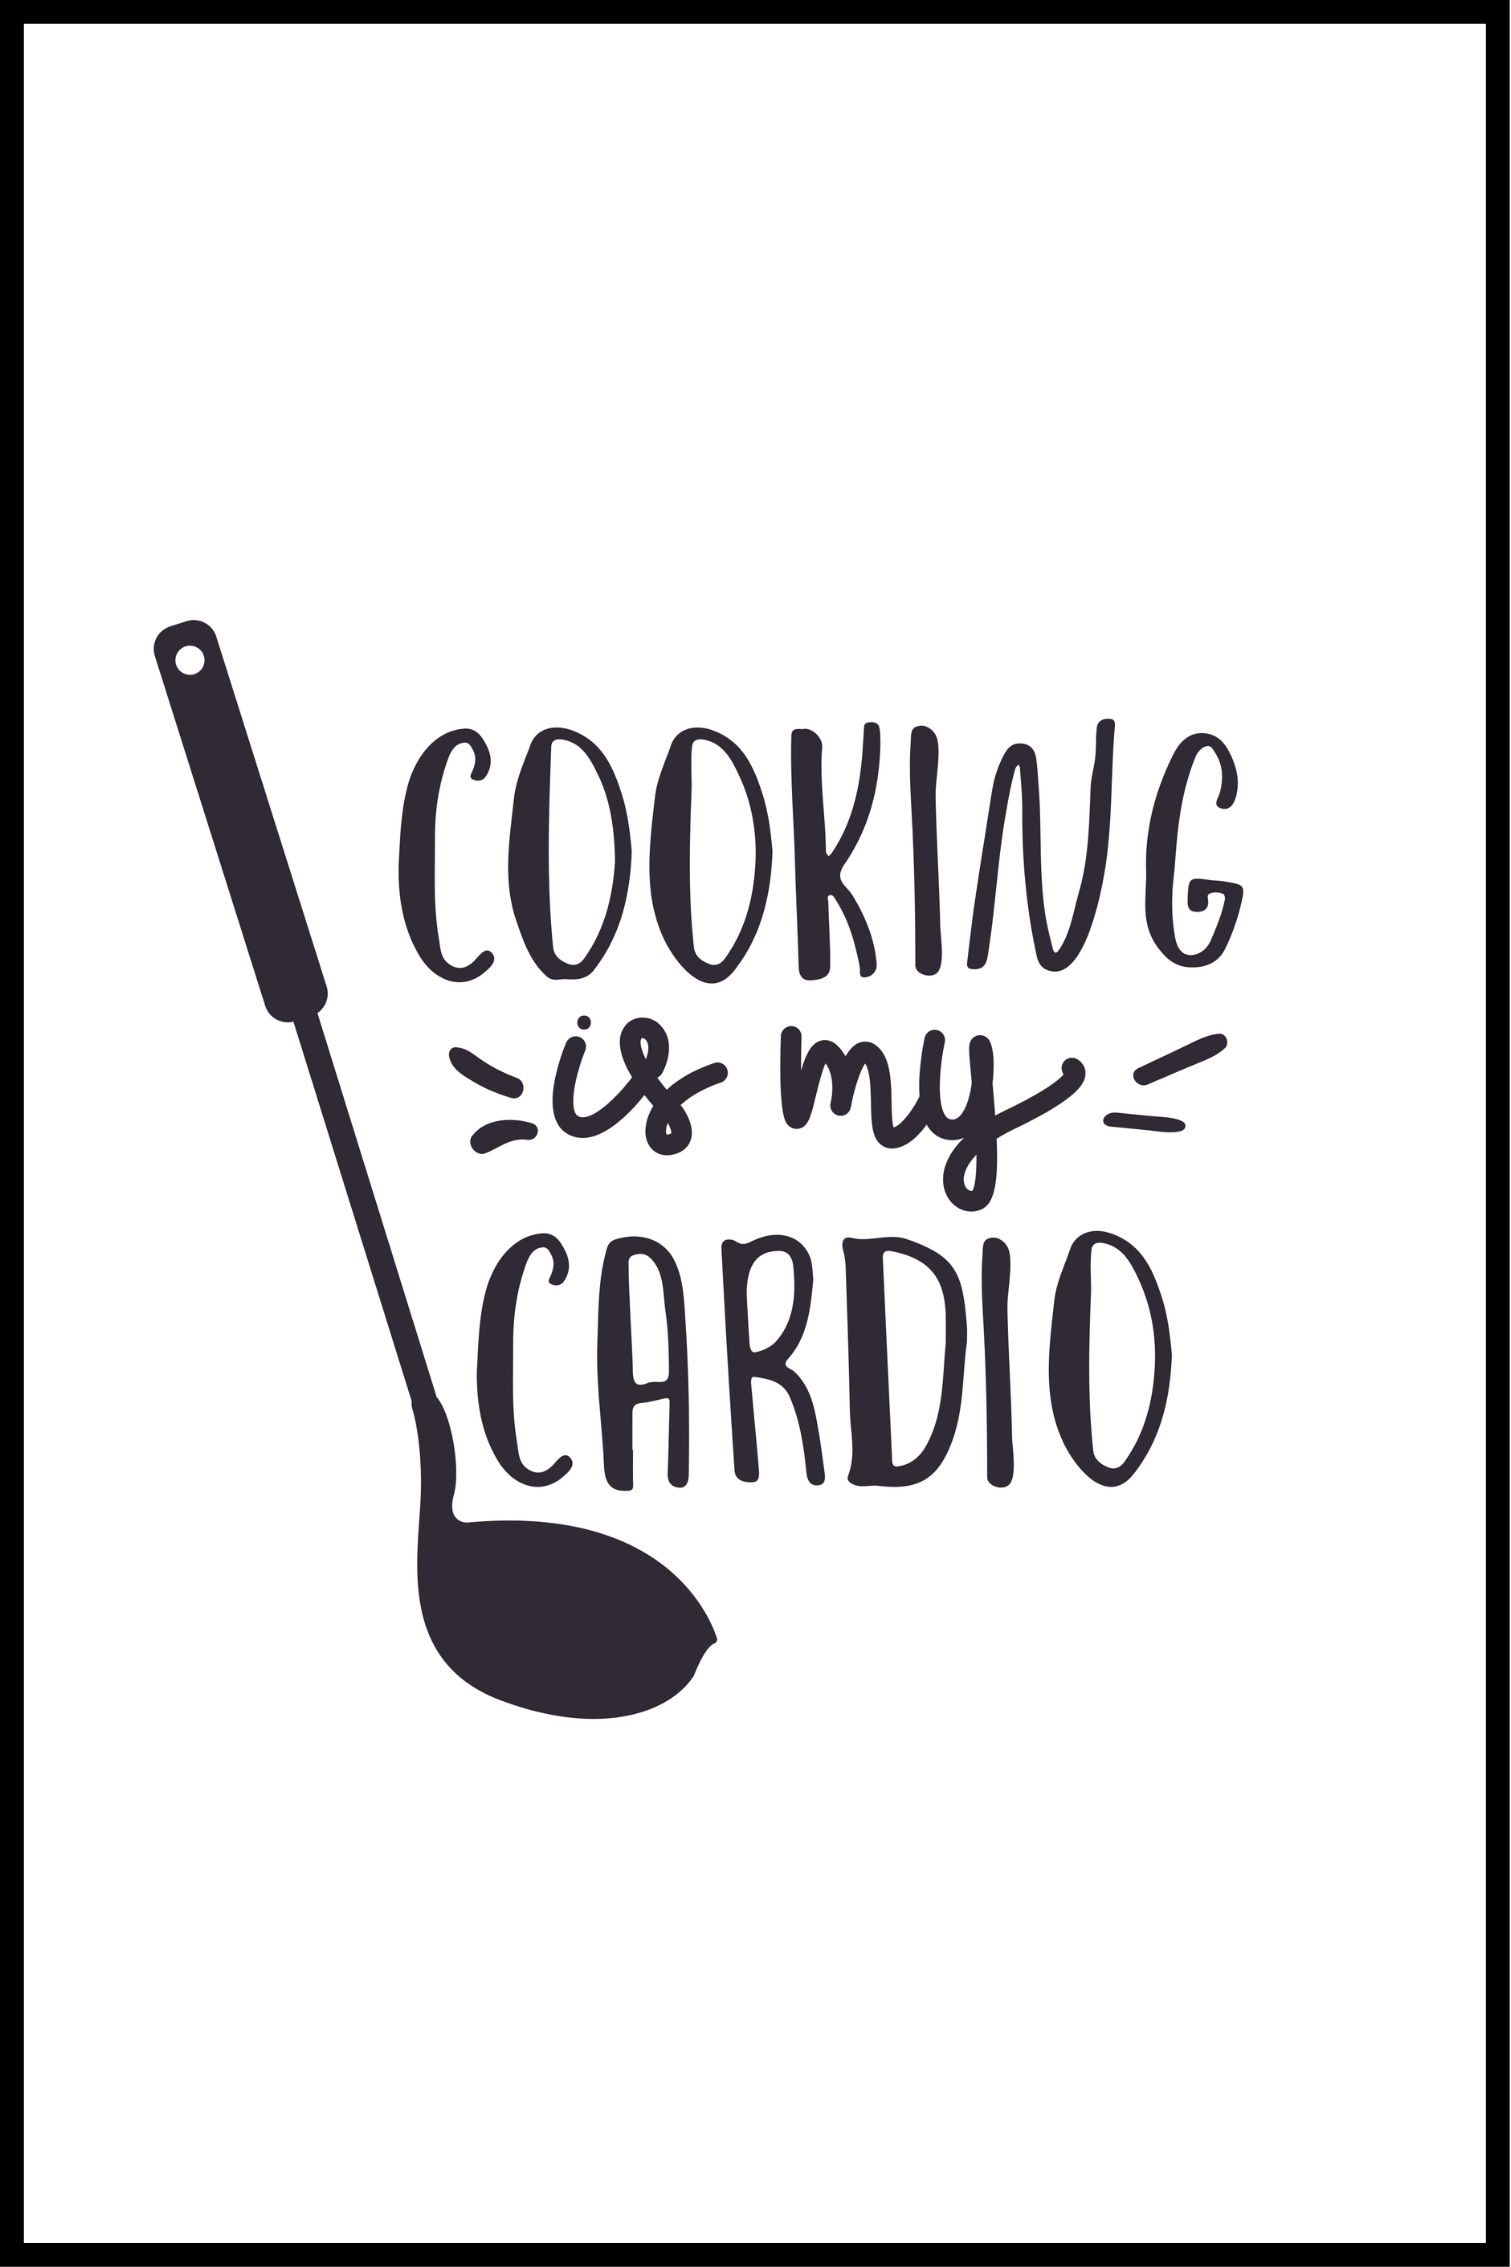 Cooking cardio plakat